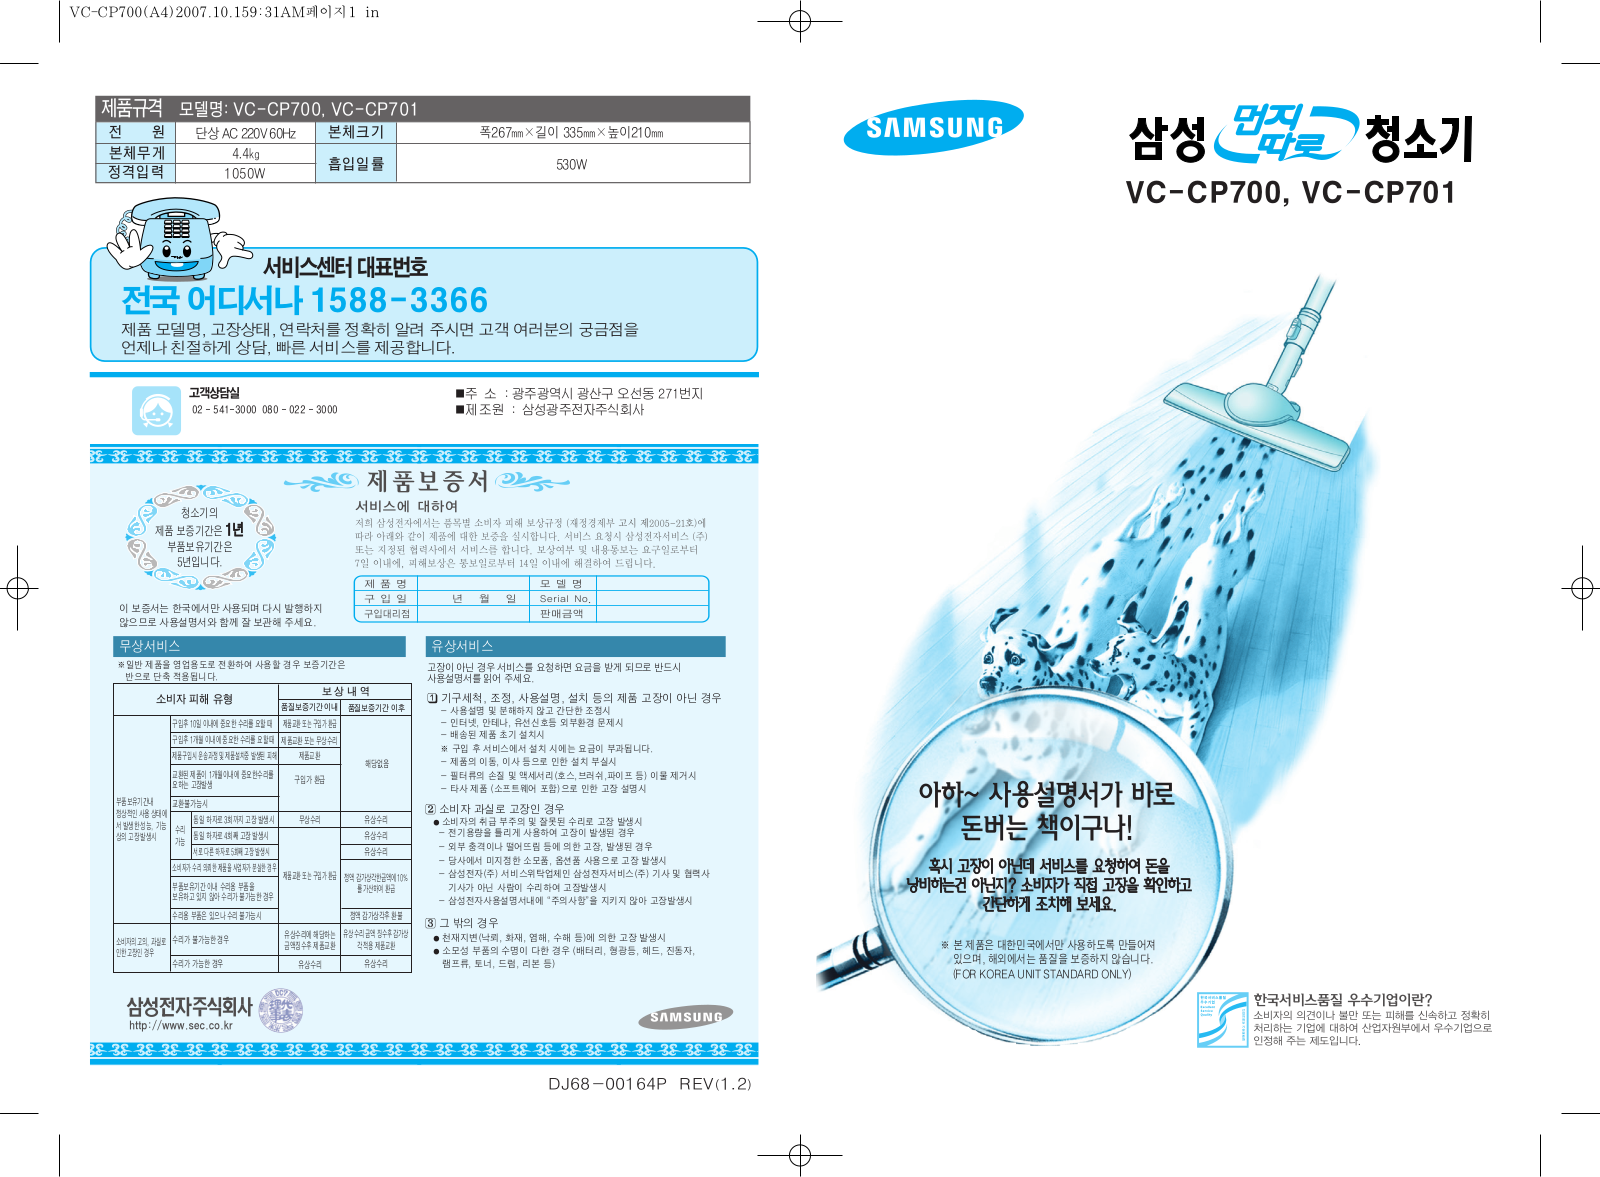 Samsung VC-CP701, VC-CP700 User Manual